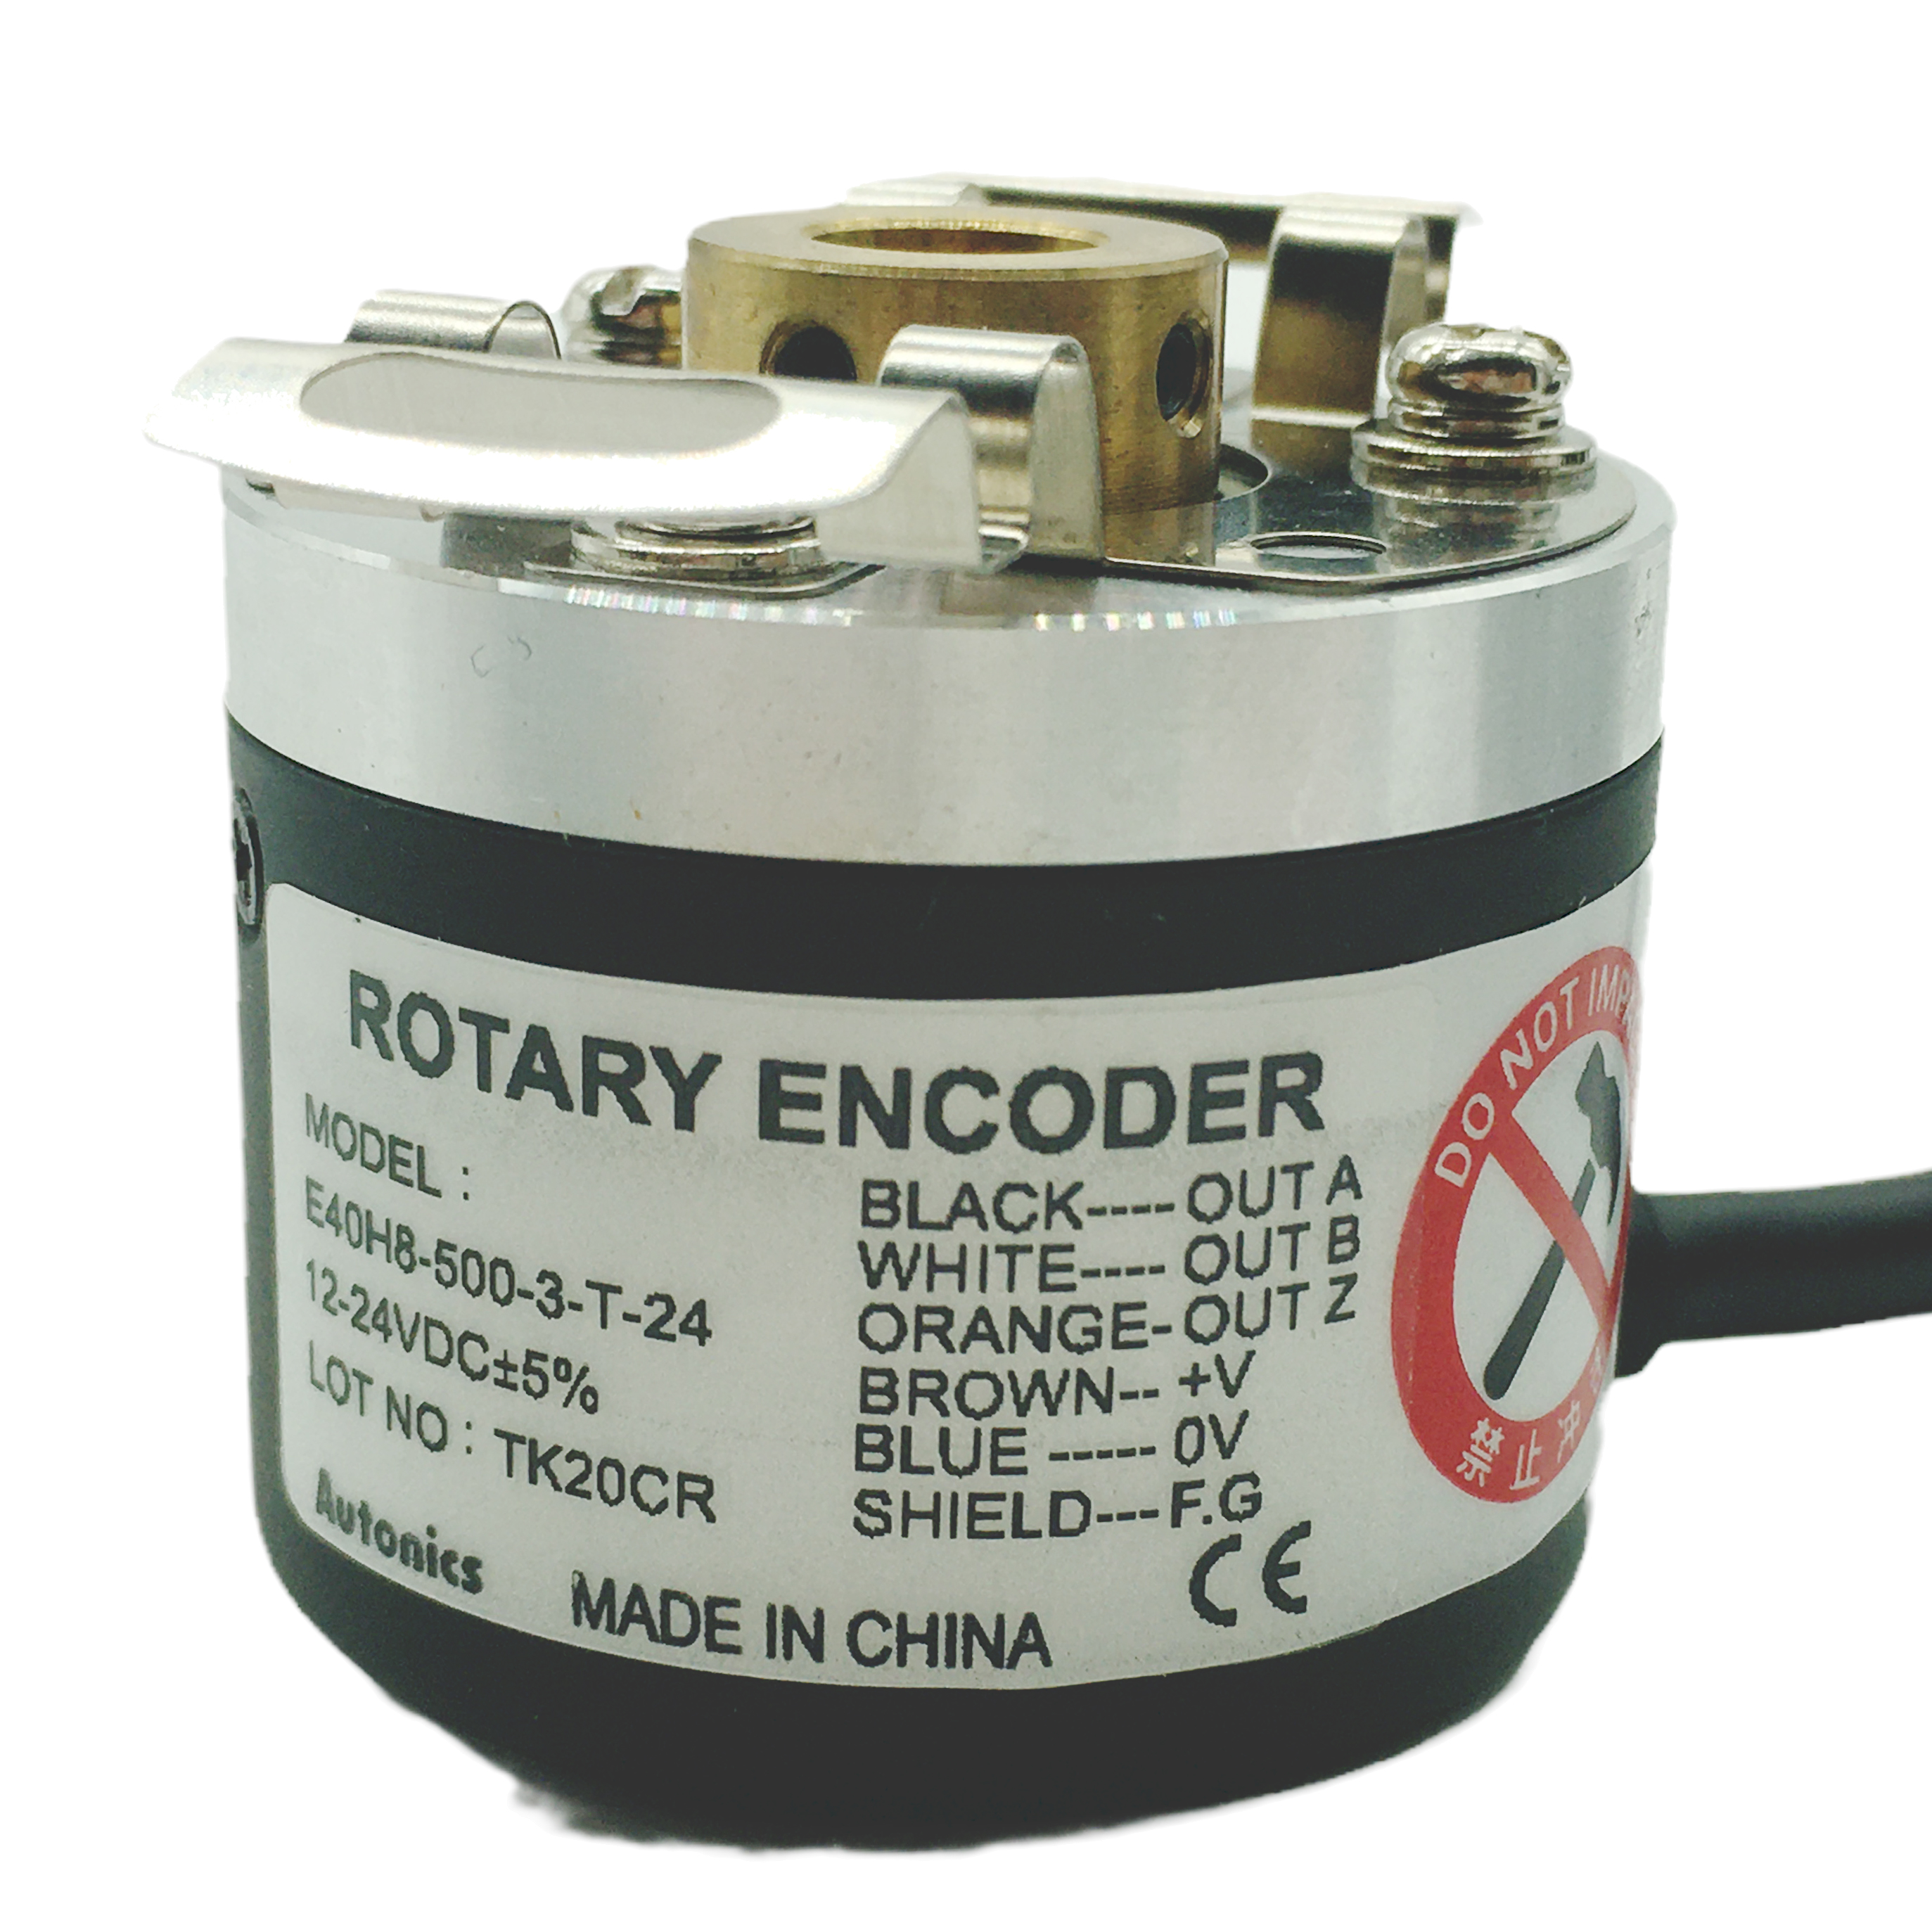 E40H8-500-3T-24 Autonics Encoder New And Original Incremental Rotary Hollow Type Encoder